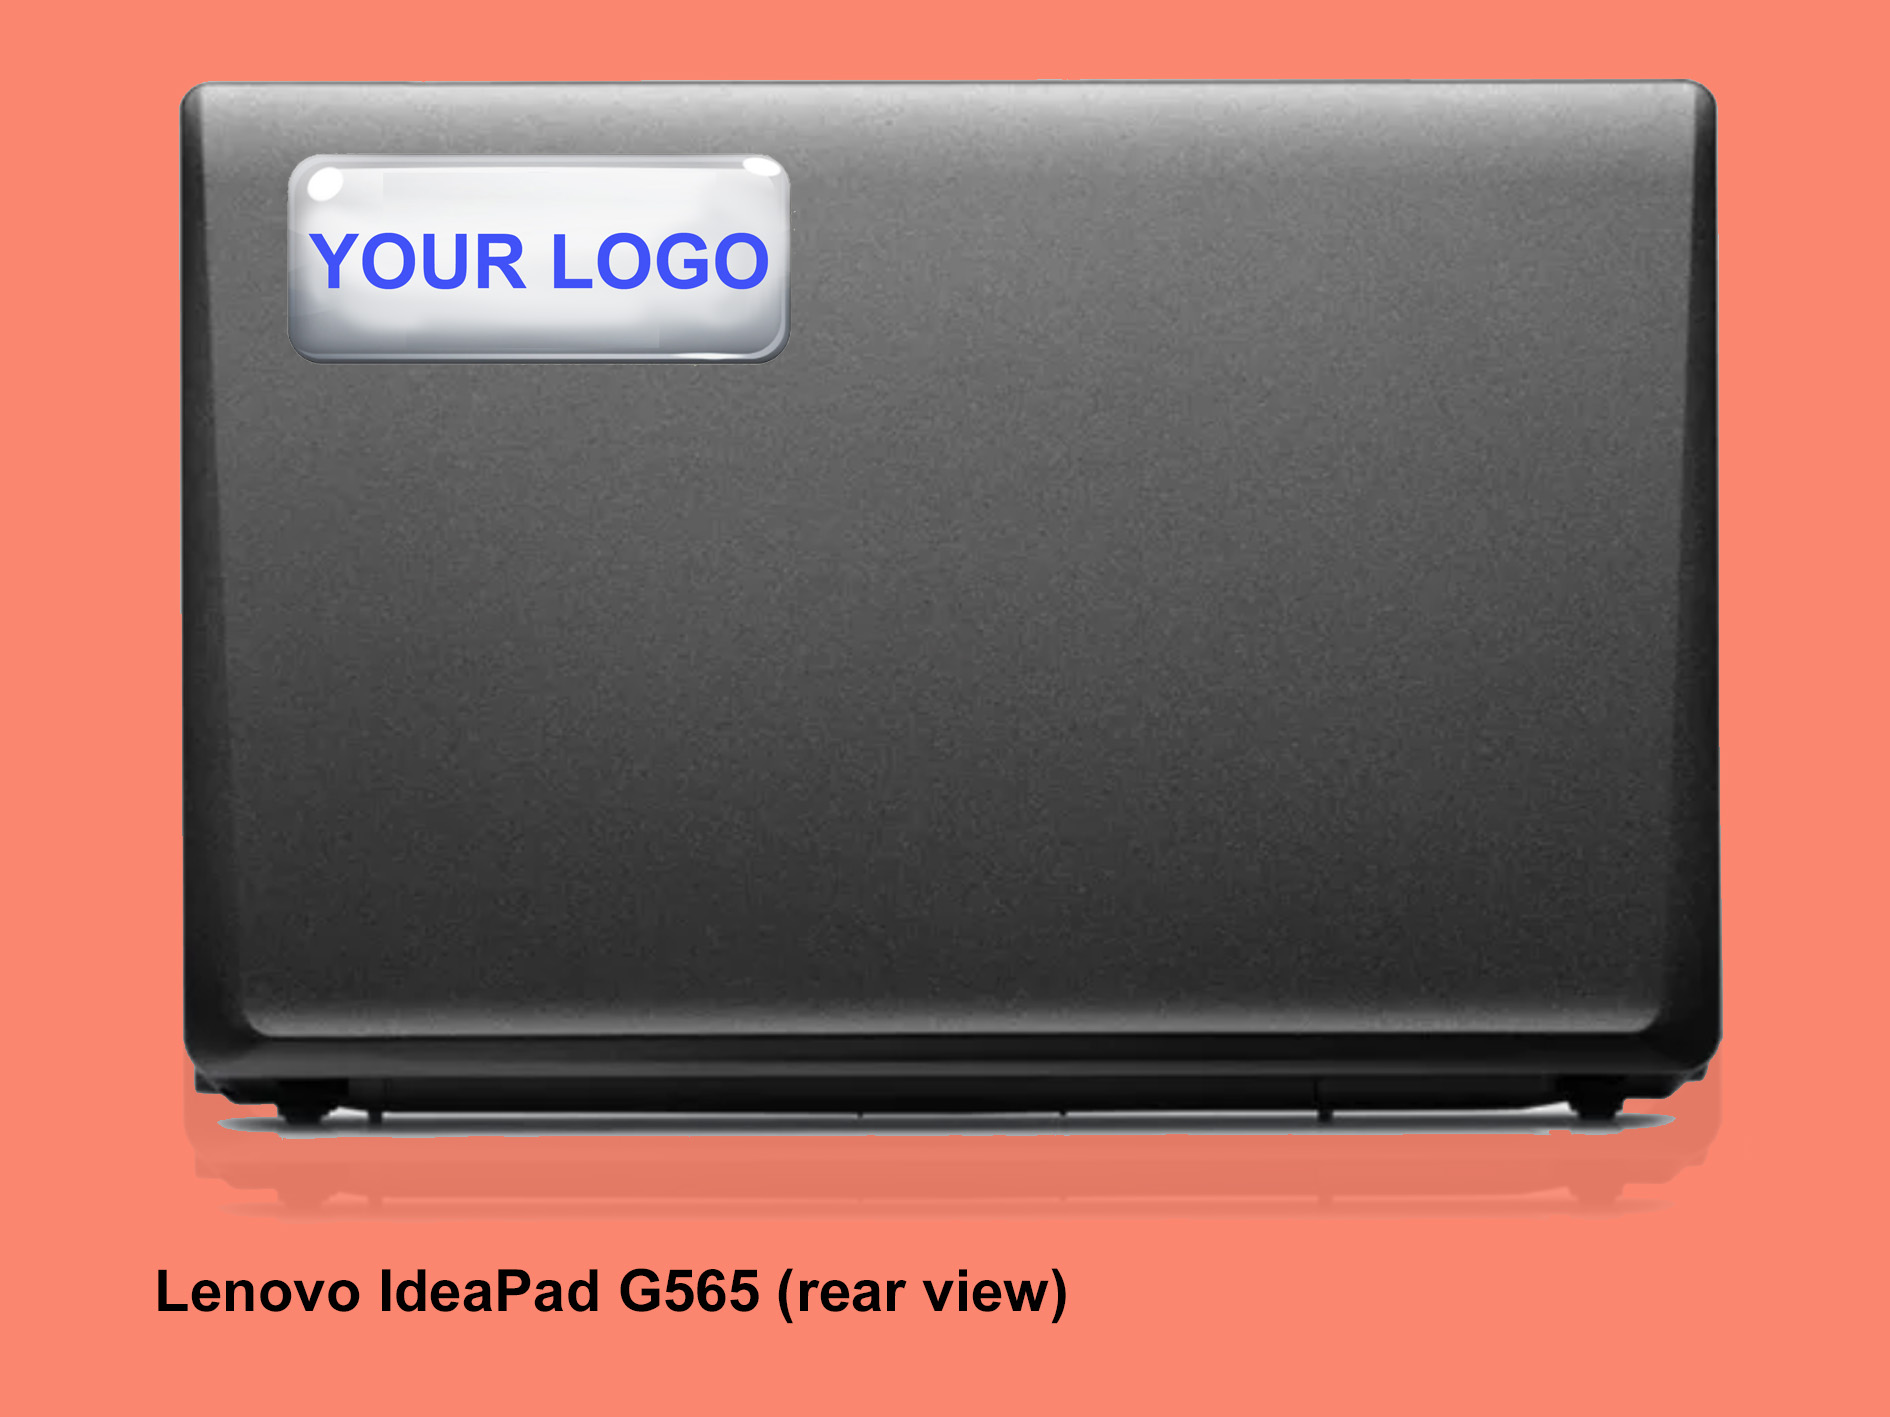 Lenovo OEM Badges and Box labels